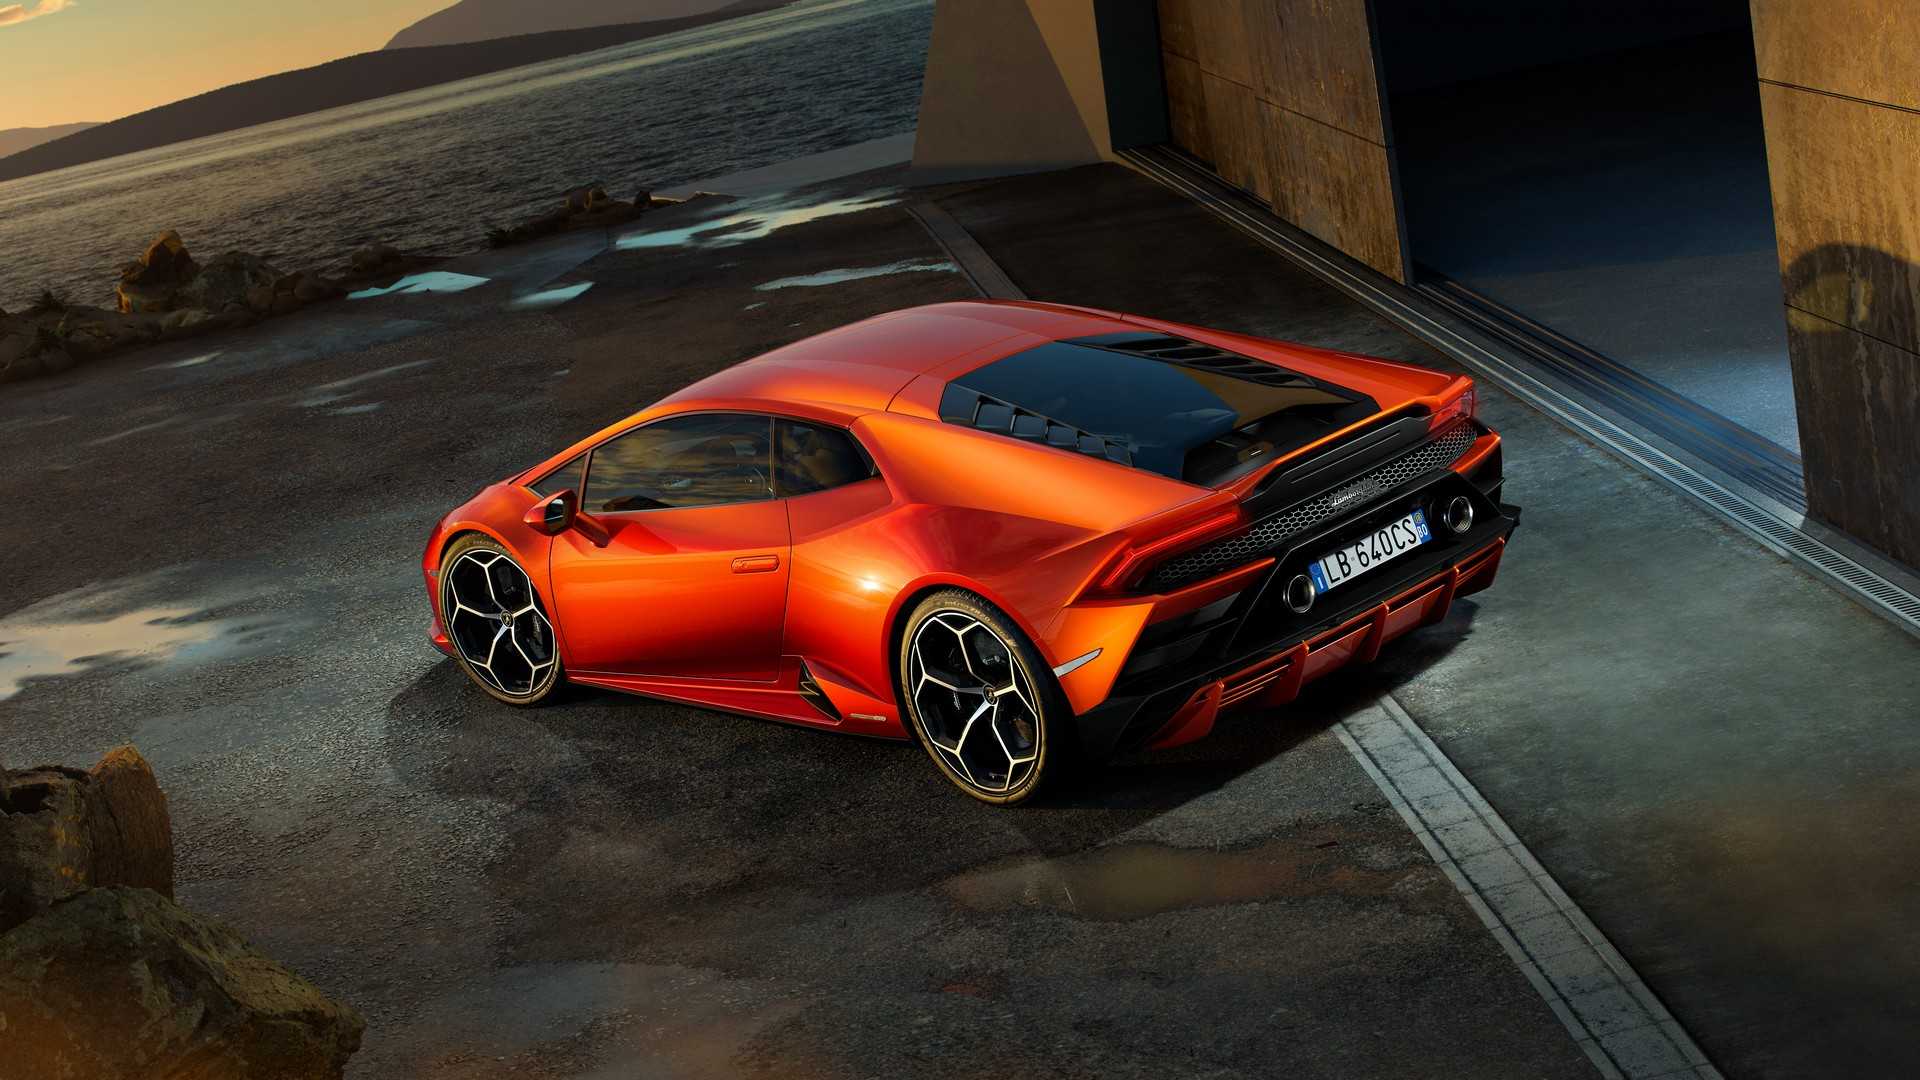 New Lamborghini Huracán EVO: elevation of technologies for amplified